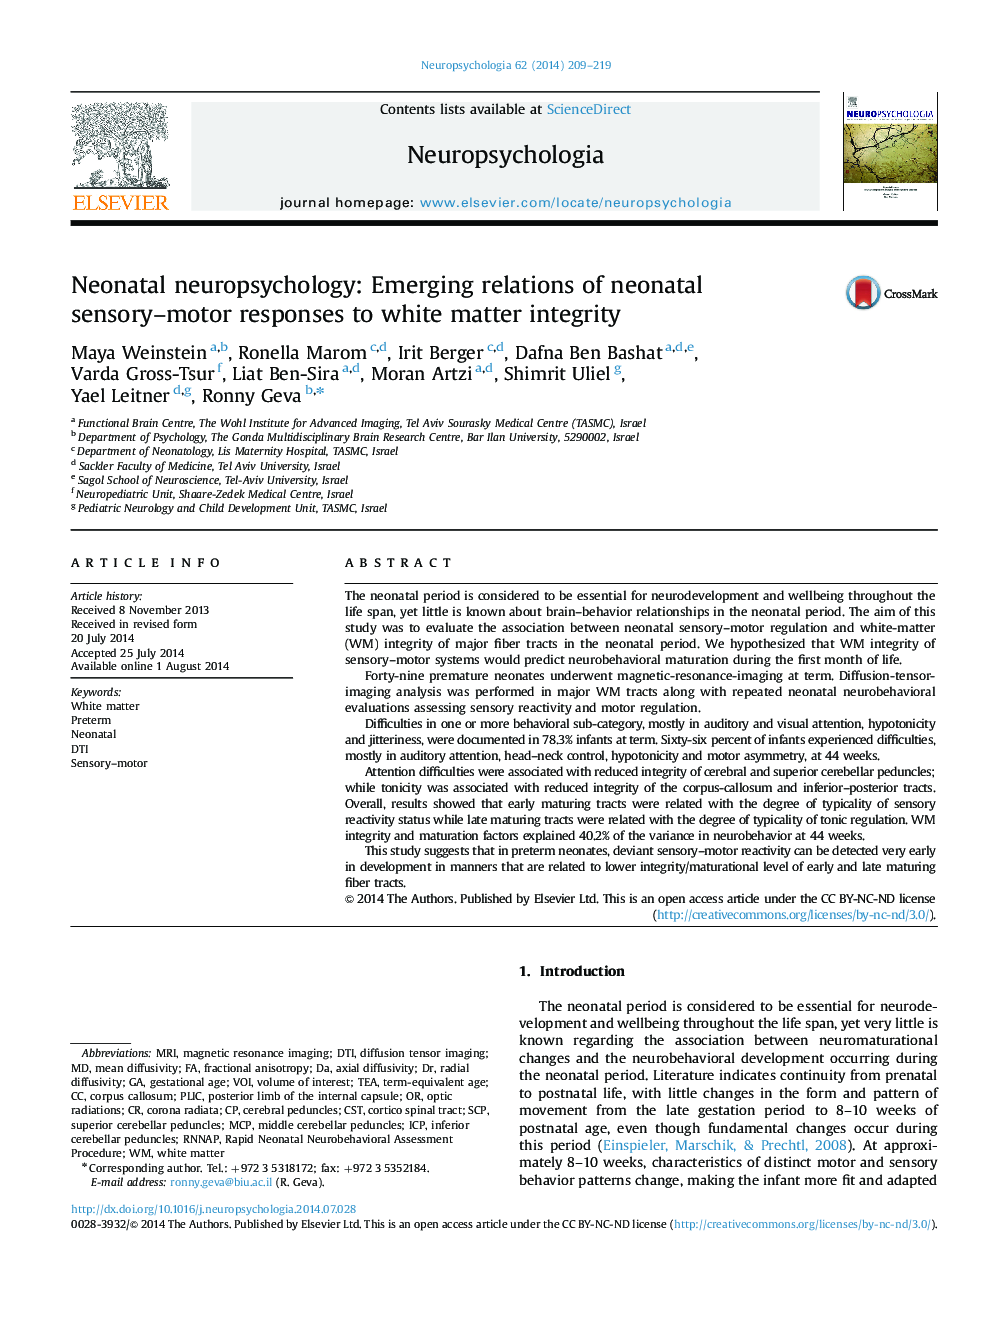 Neonatal neuropsychology: Emerging relations of neonatal sensory-motor responses to white matter integrity